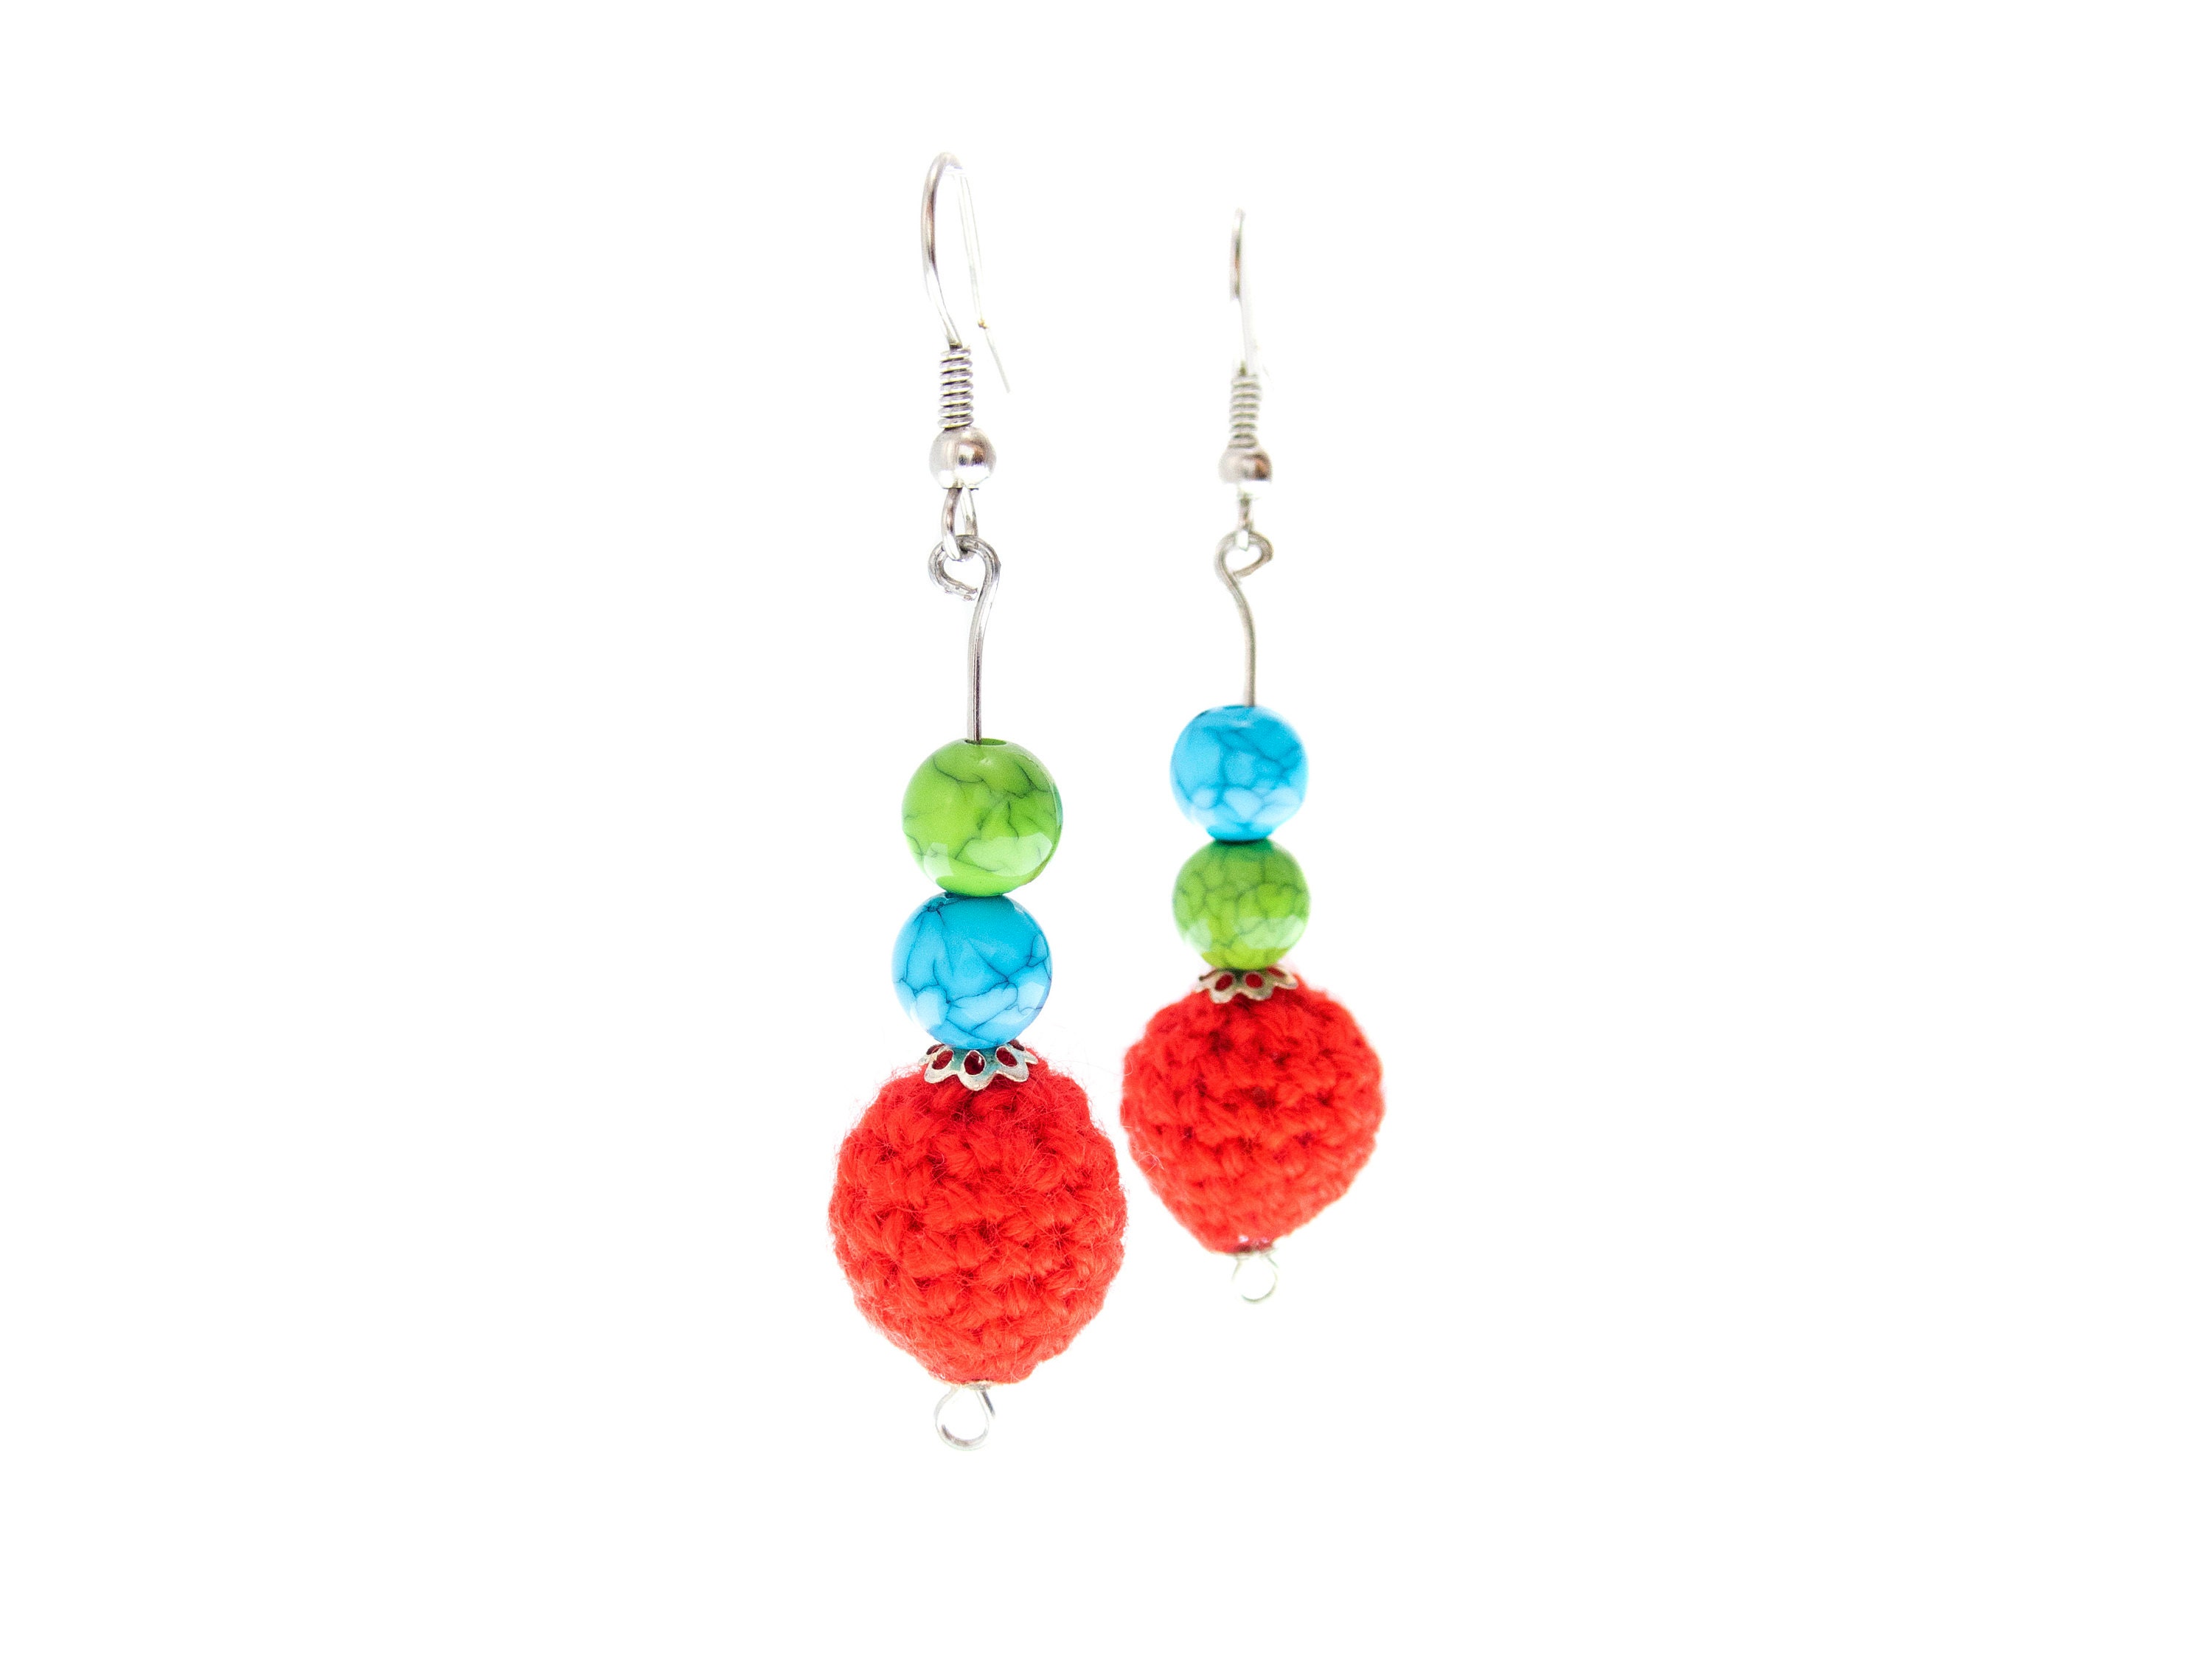 fashion statement earrings handmade of red, green, blue dangling balls